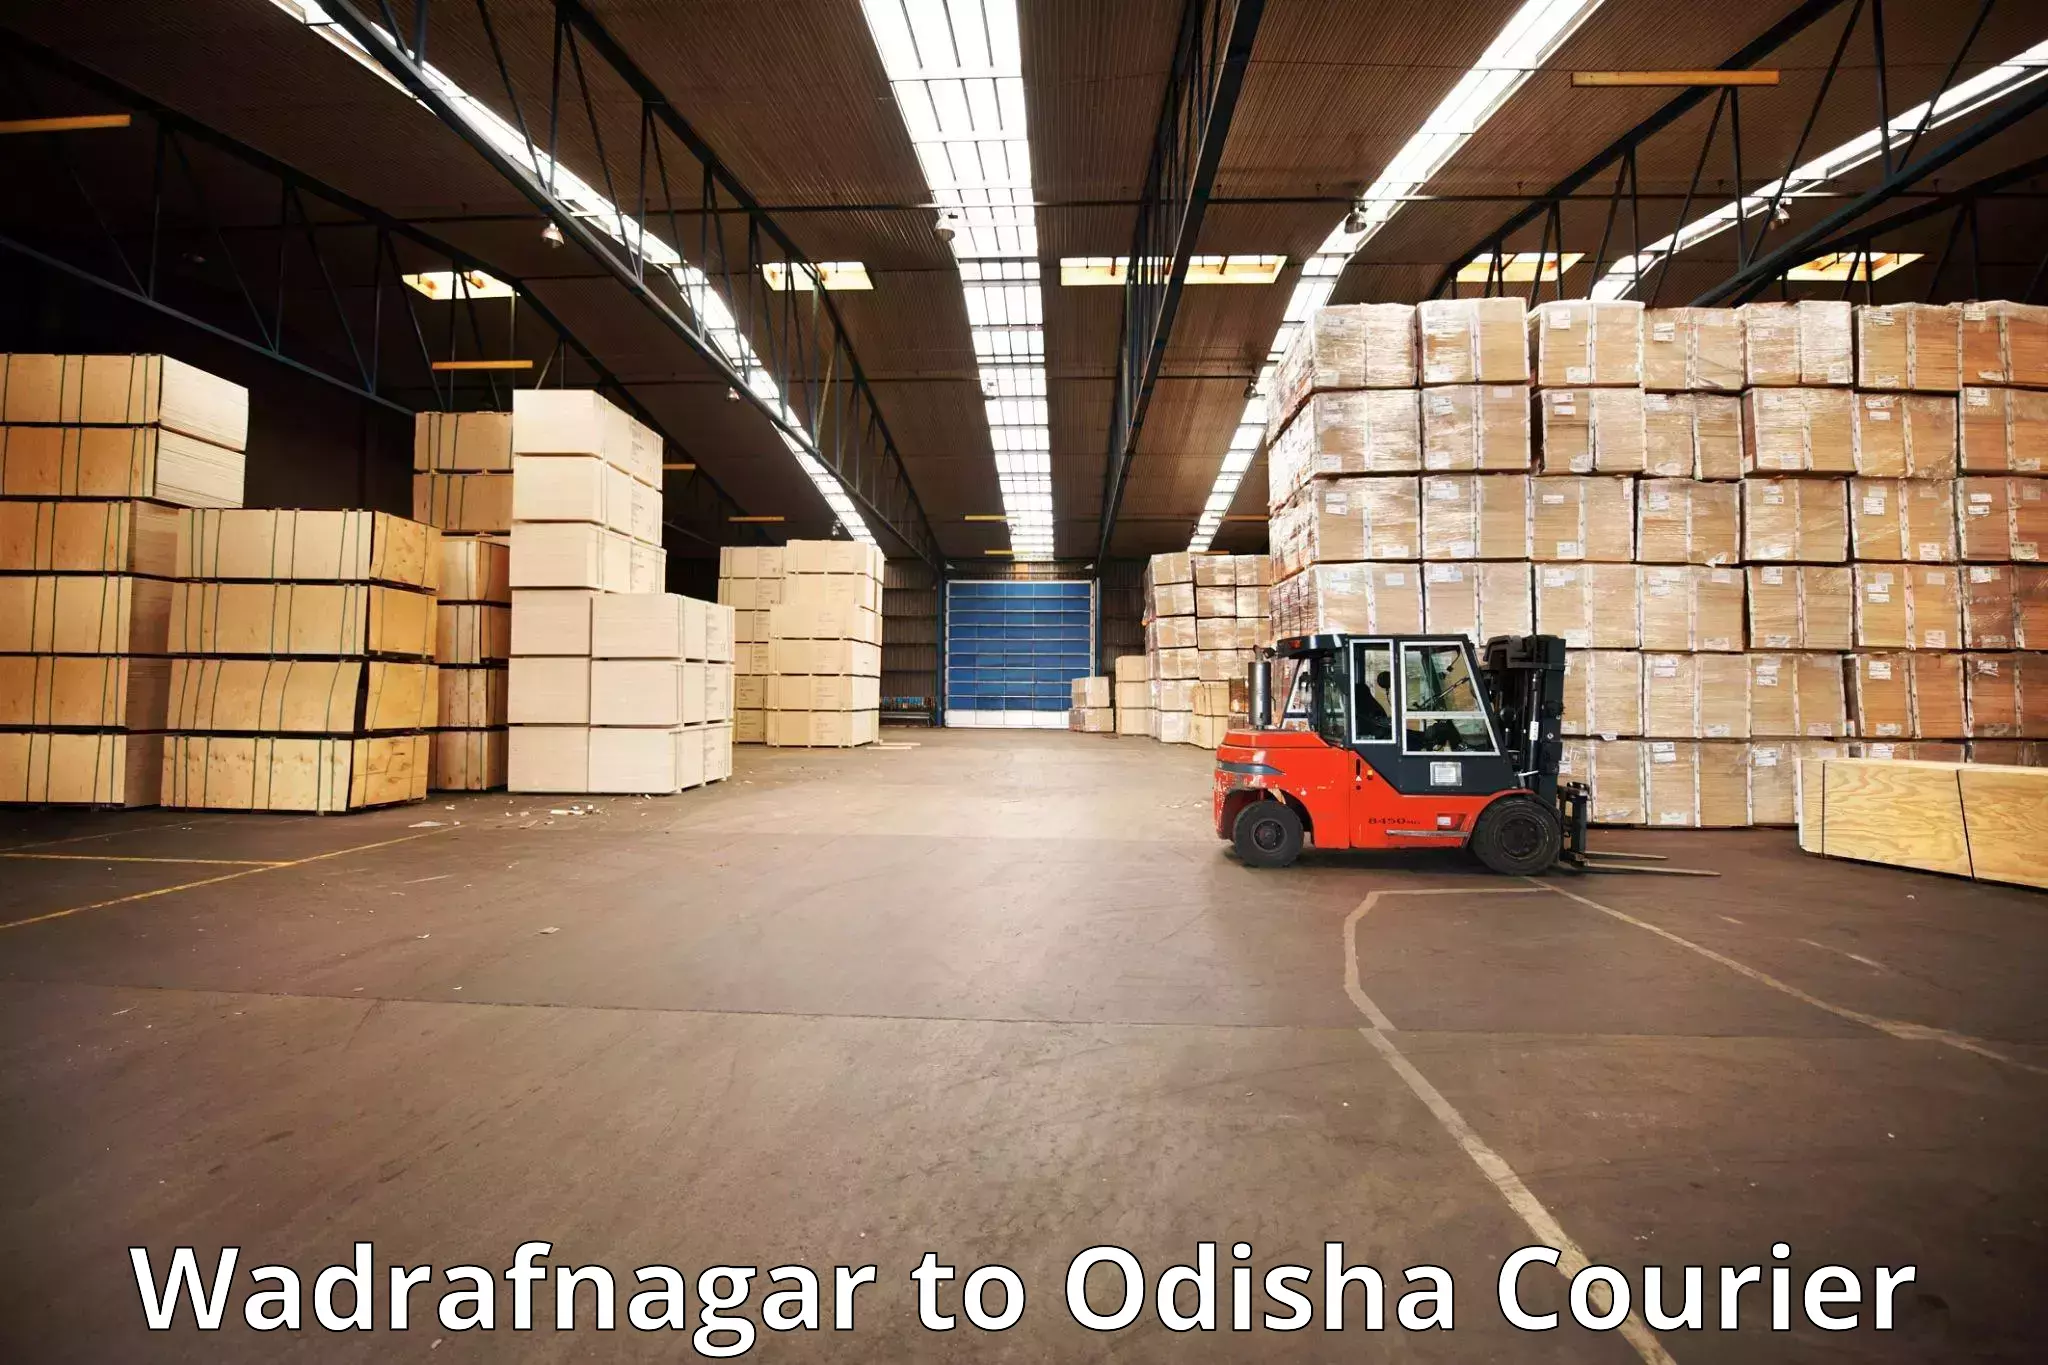 Luggage delivery network Wadrafnagar to Bargarh